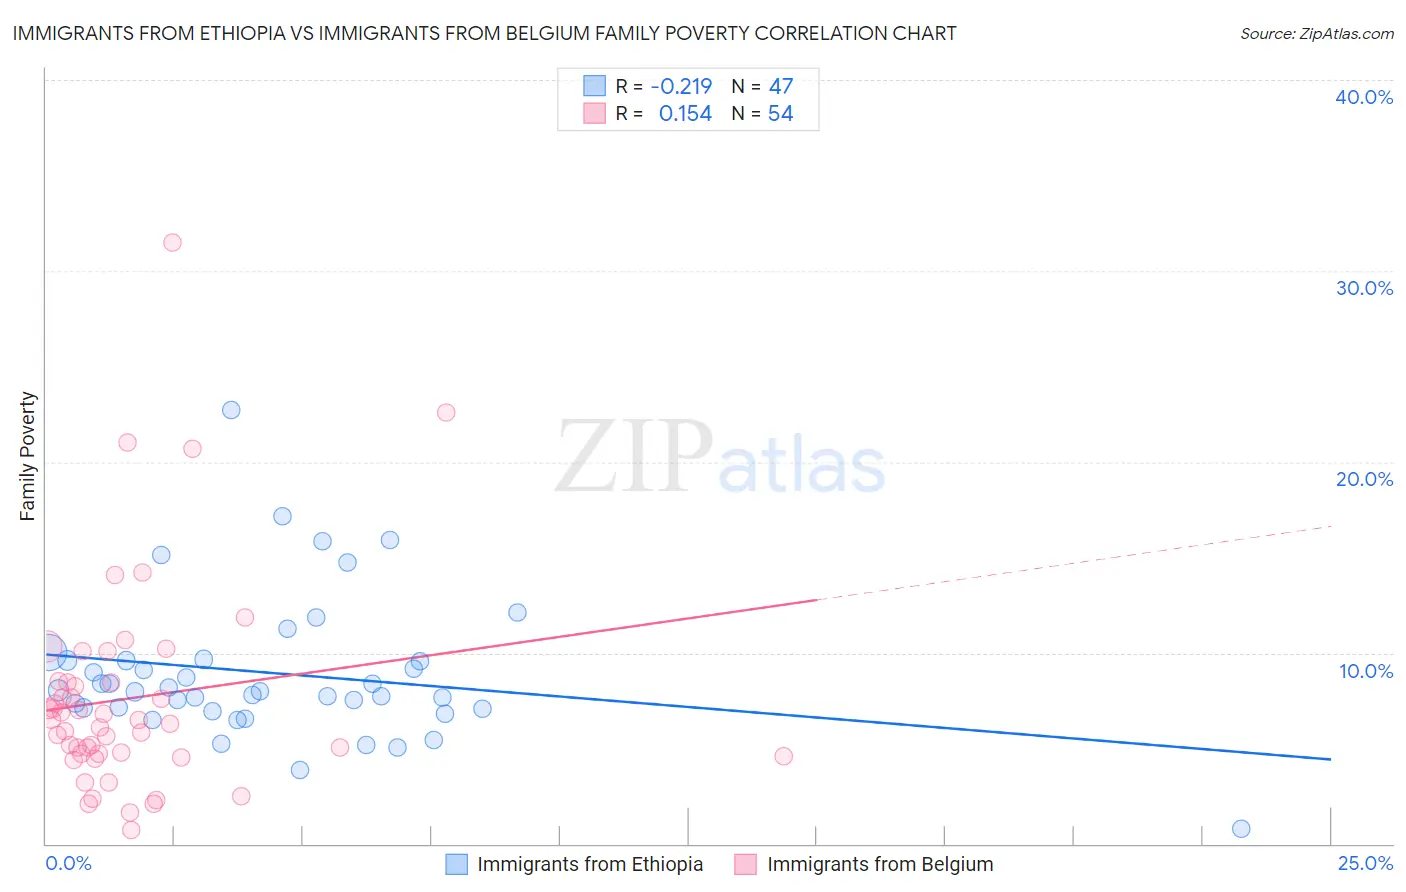 Immigrants from Ethiopia vs Immigrants from Belgium Family Poverty